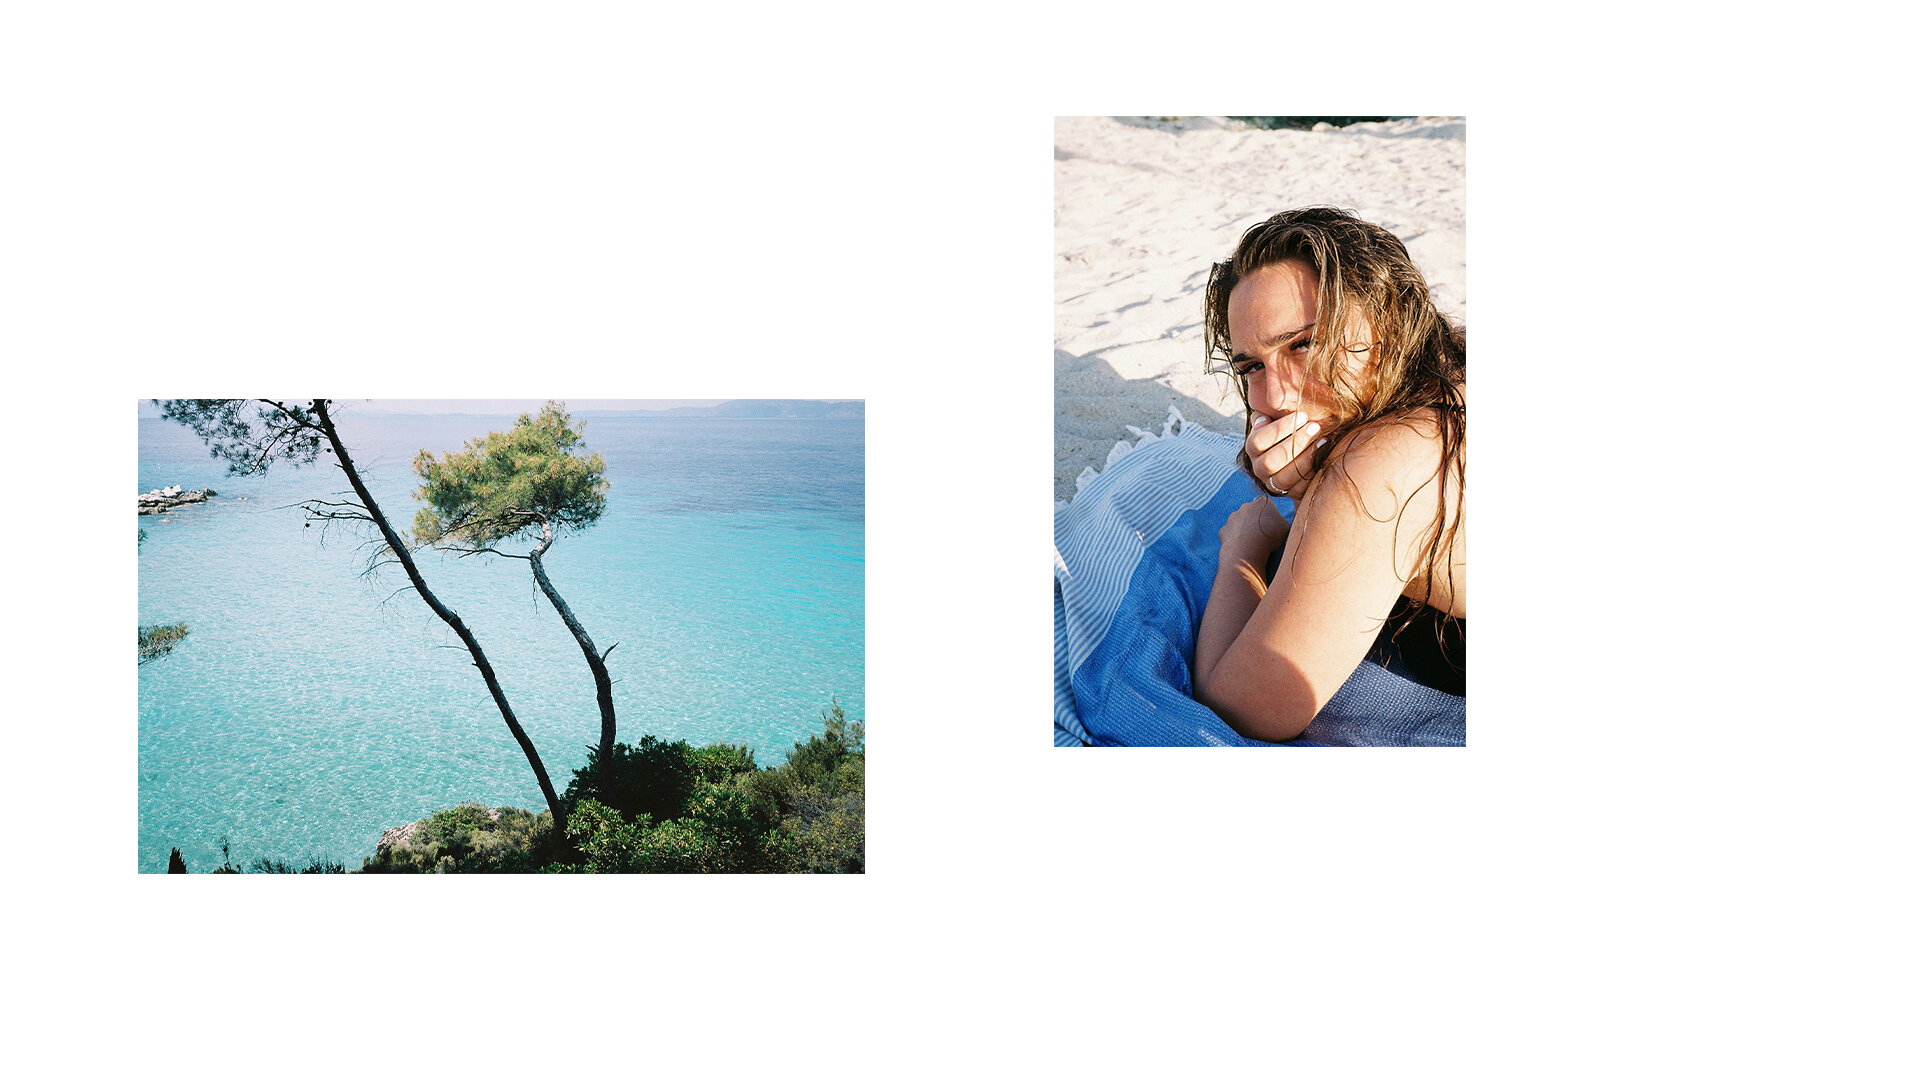 toby-butler-photo-tobybutlerphoto-lifestylephotography-travel-travelphotography-lifestyle-tourism-greece-film-35mm-magazine-europe-mediterranean-ocean-7.jpg